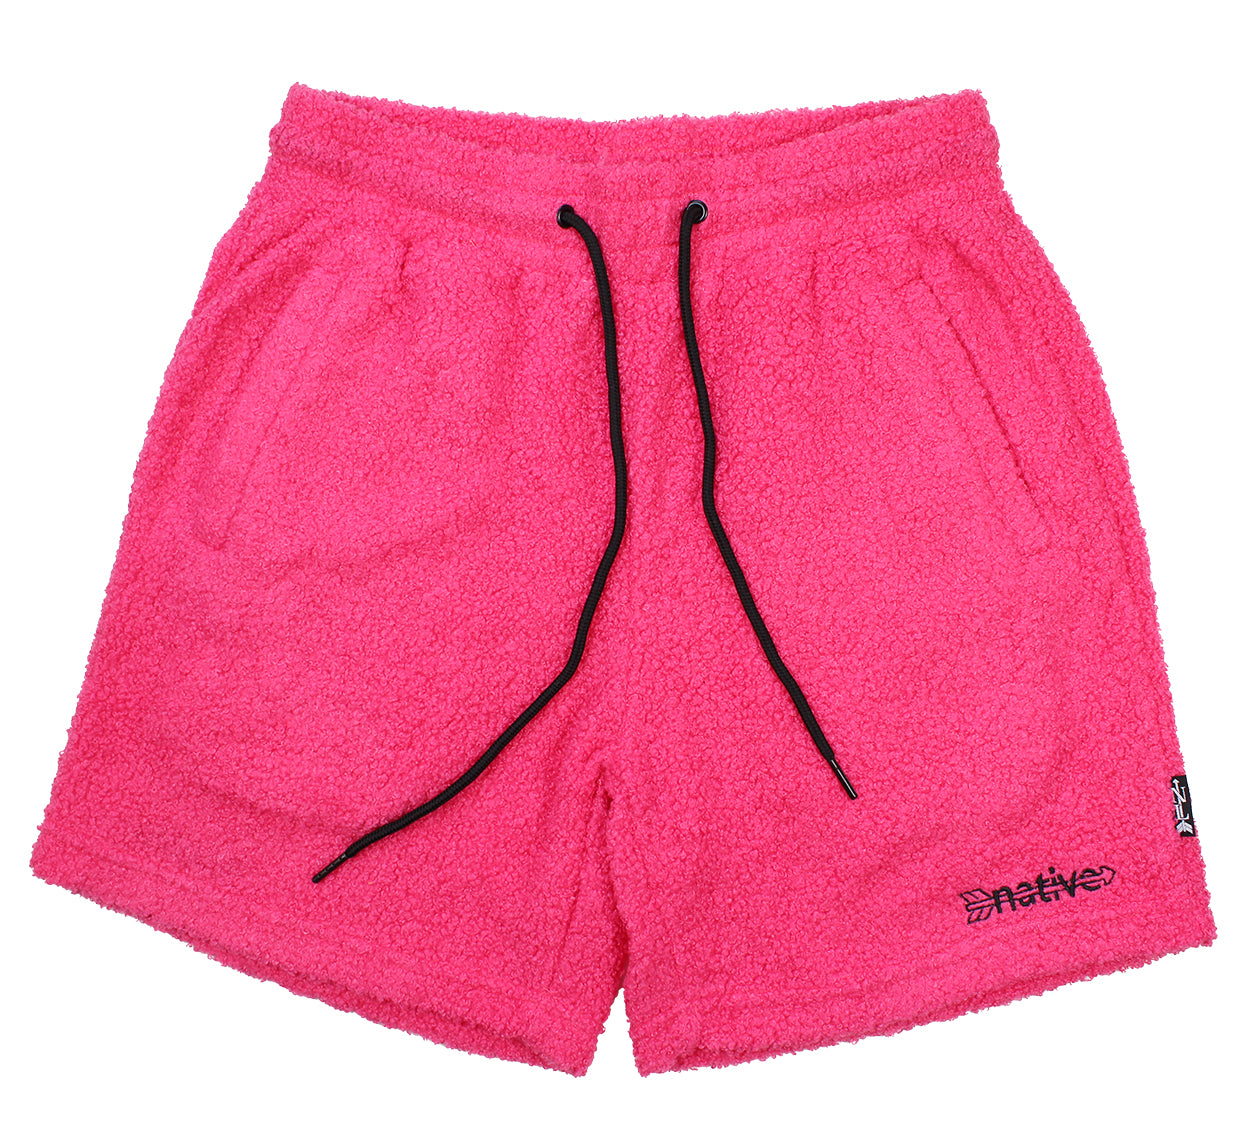 sherpa shorts in hot pink